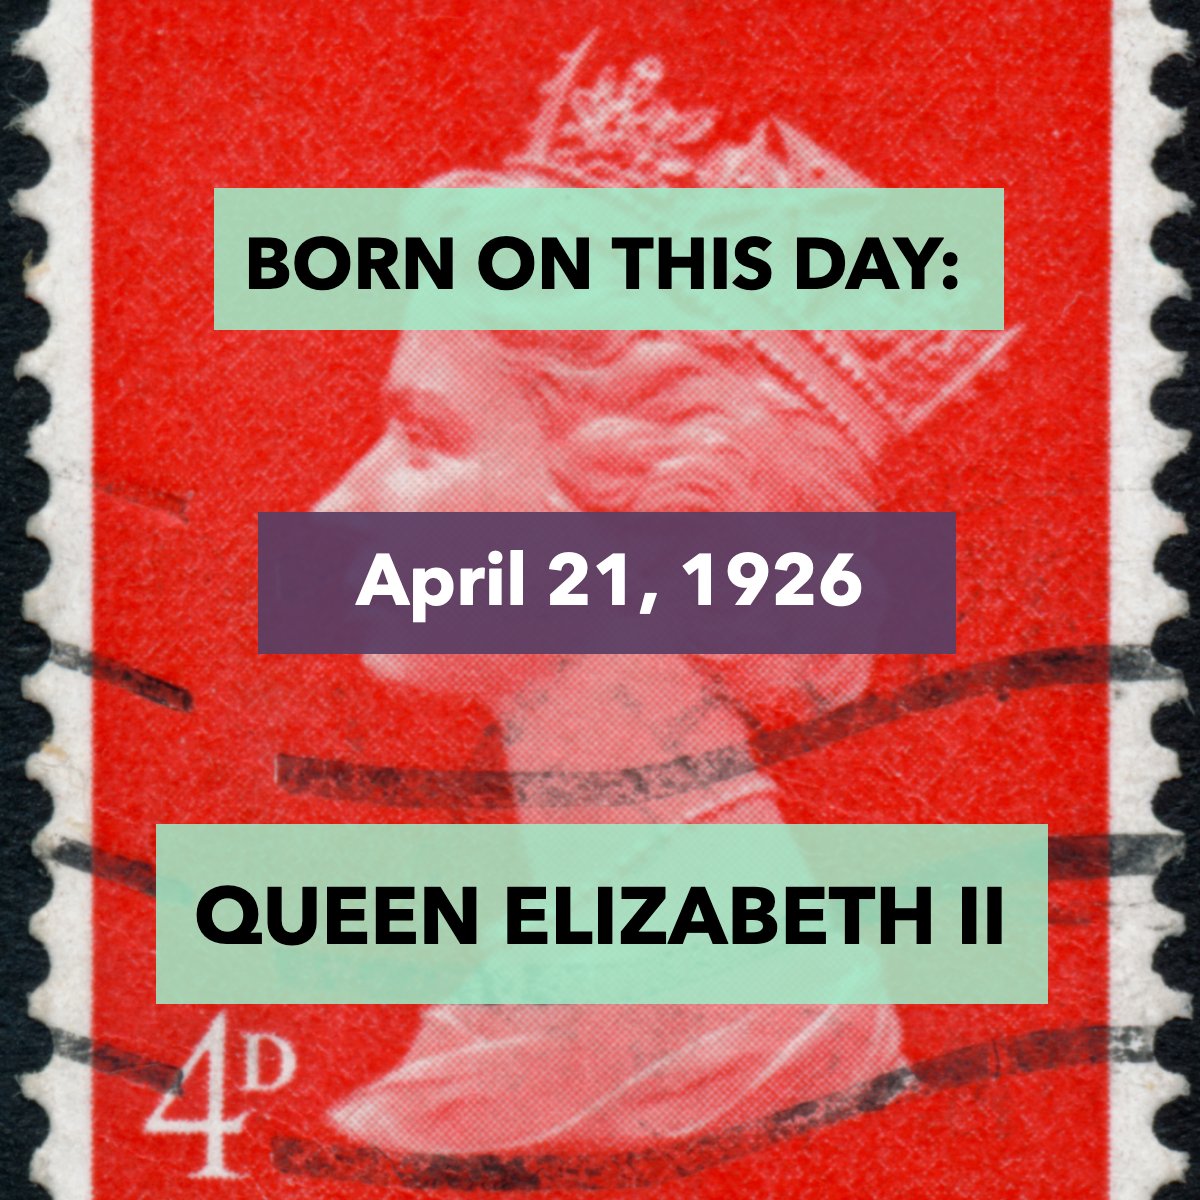 Today marks the birthday of Queen Elizabeth II

She was Britain's longest-reigning monarch

#queen👑  #borntoday #bornonthisday #famousbirthdays 
 #realtyexecutivesarizonaterritory #liveloveplaytucaon #kellymilleraz